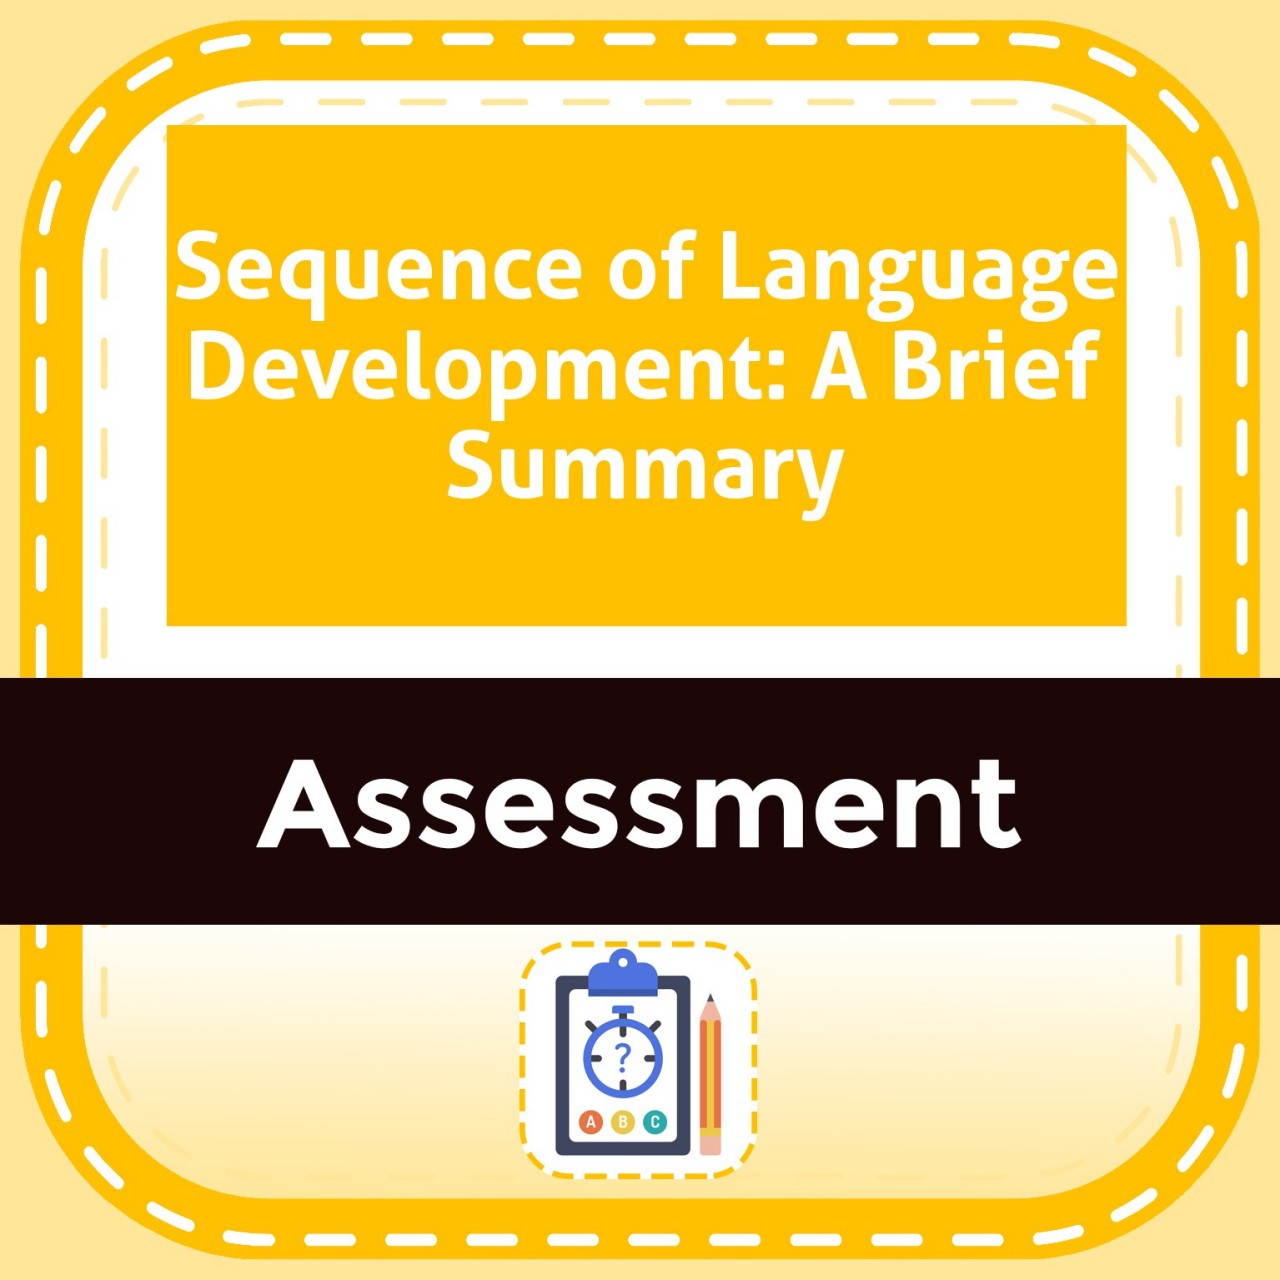 Sequence of Language Development: A Brief Summary